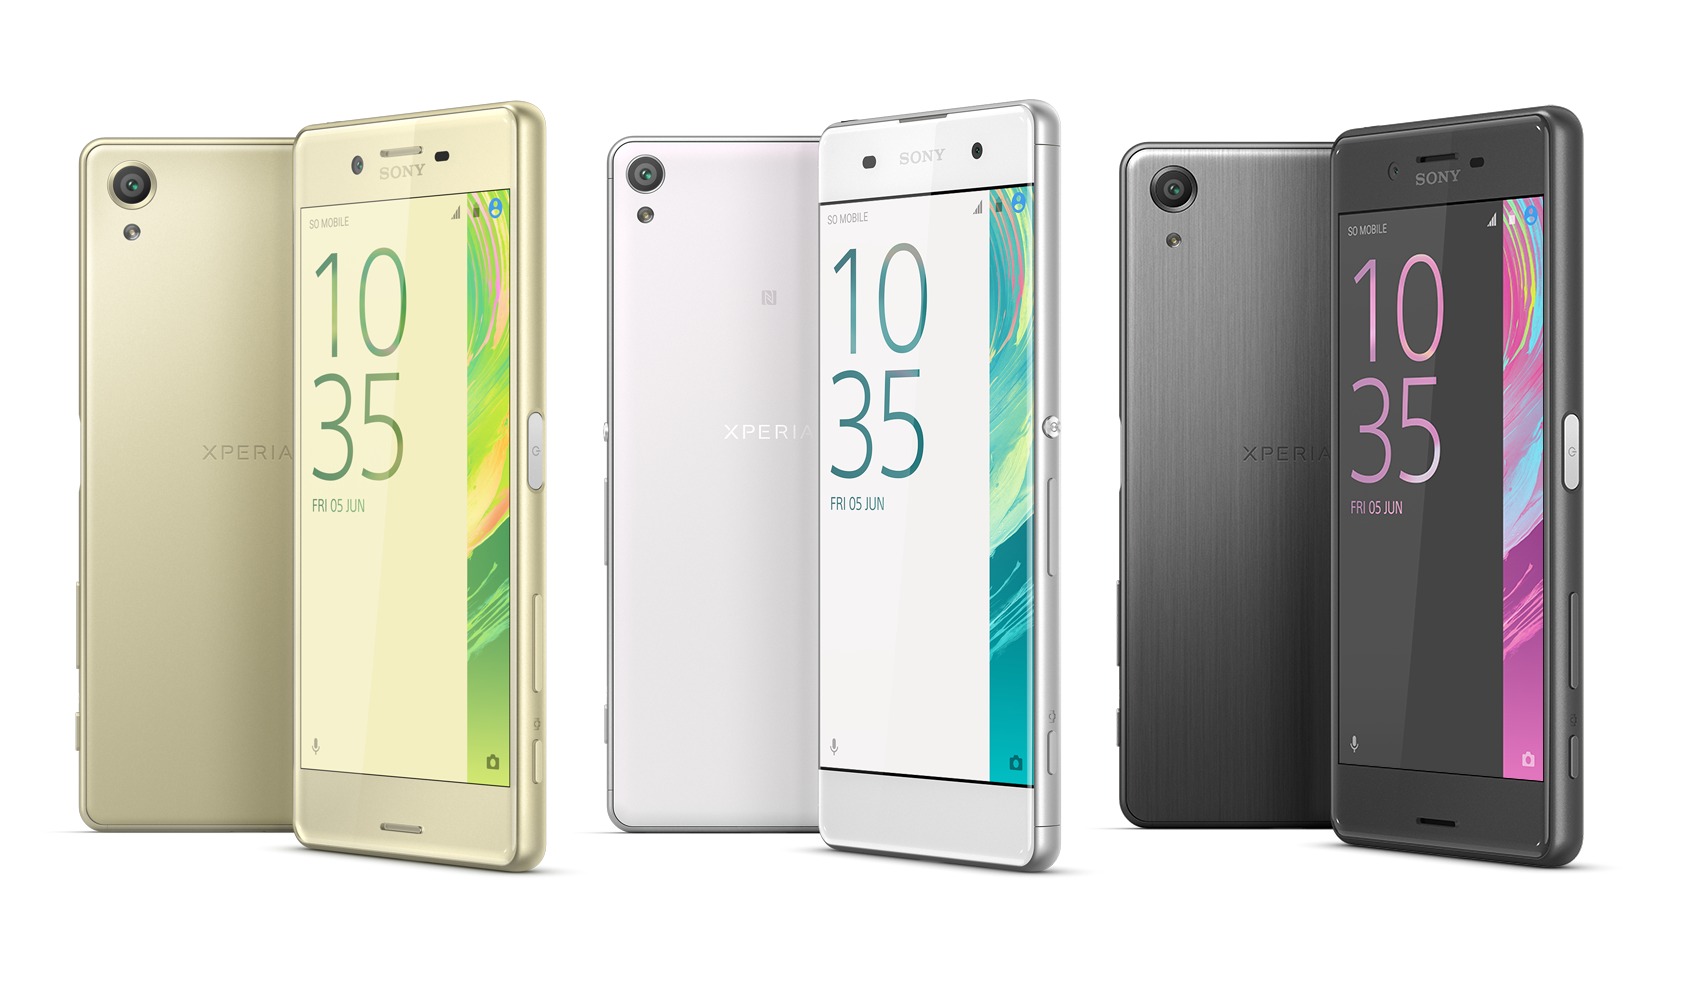 Sony announces Xperia X smartphone series - News